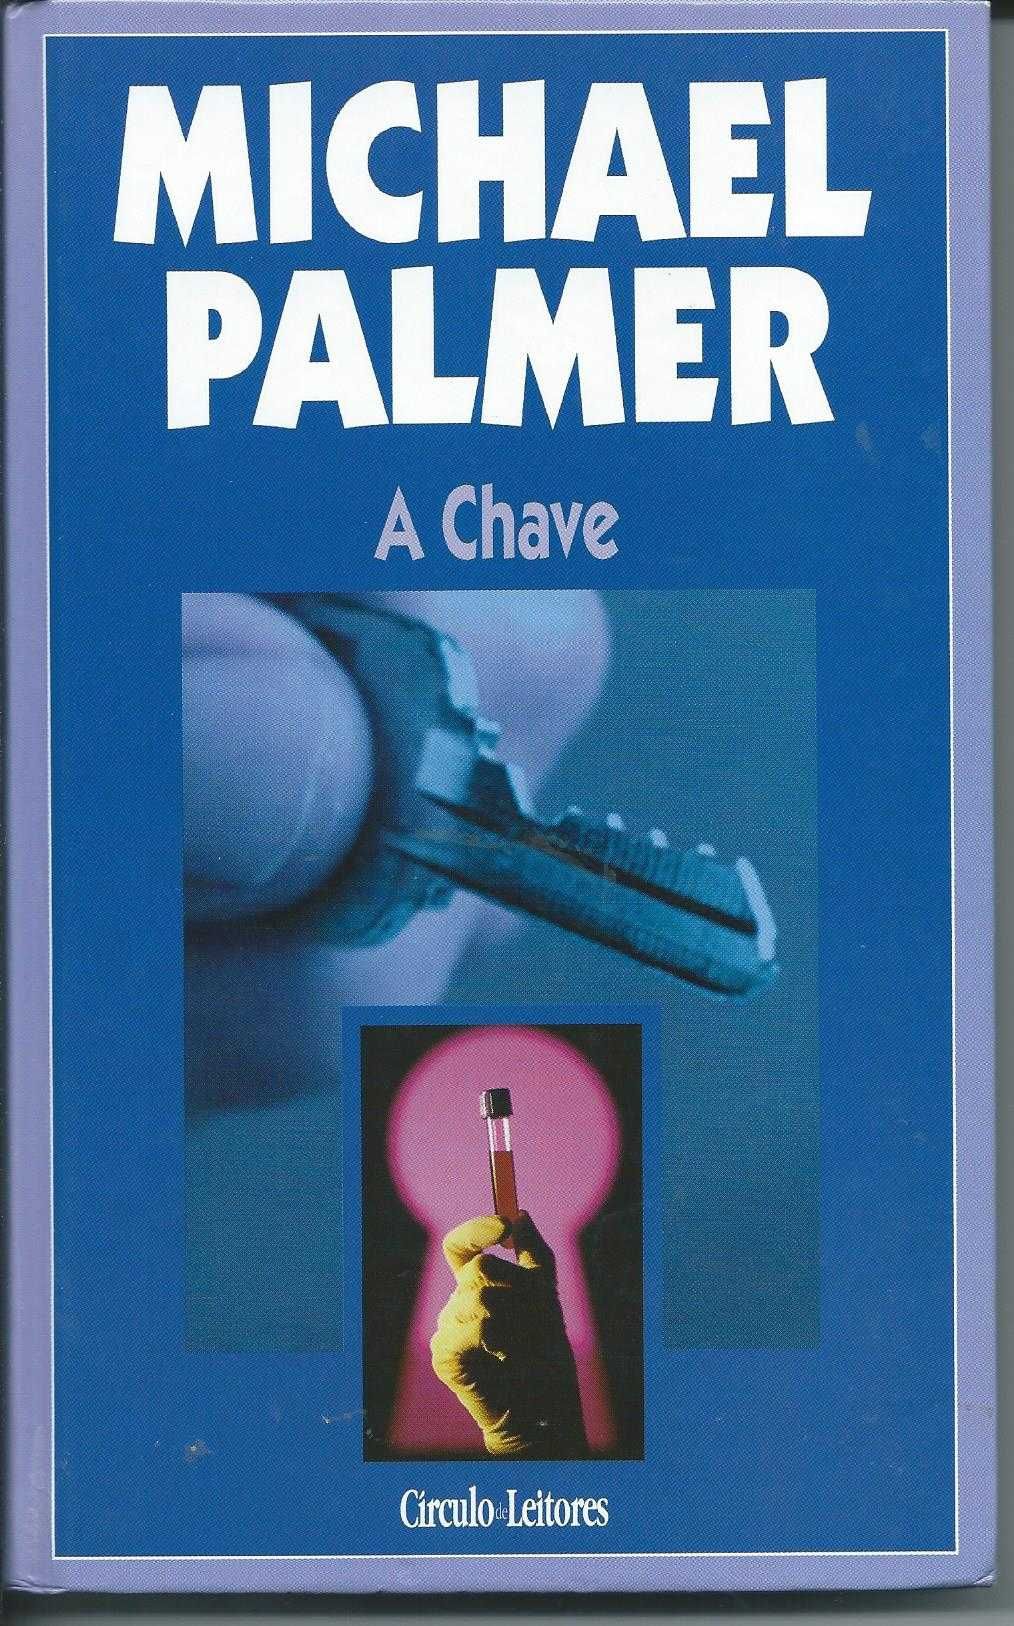 Thrillers de Michael Palmer Como Novos! - 10 Títulos/ Ofereço 2